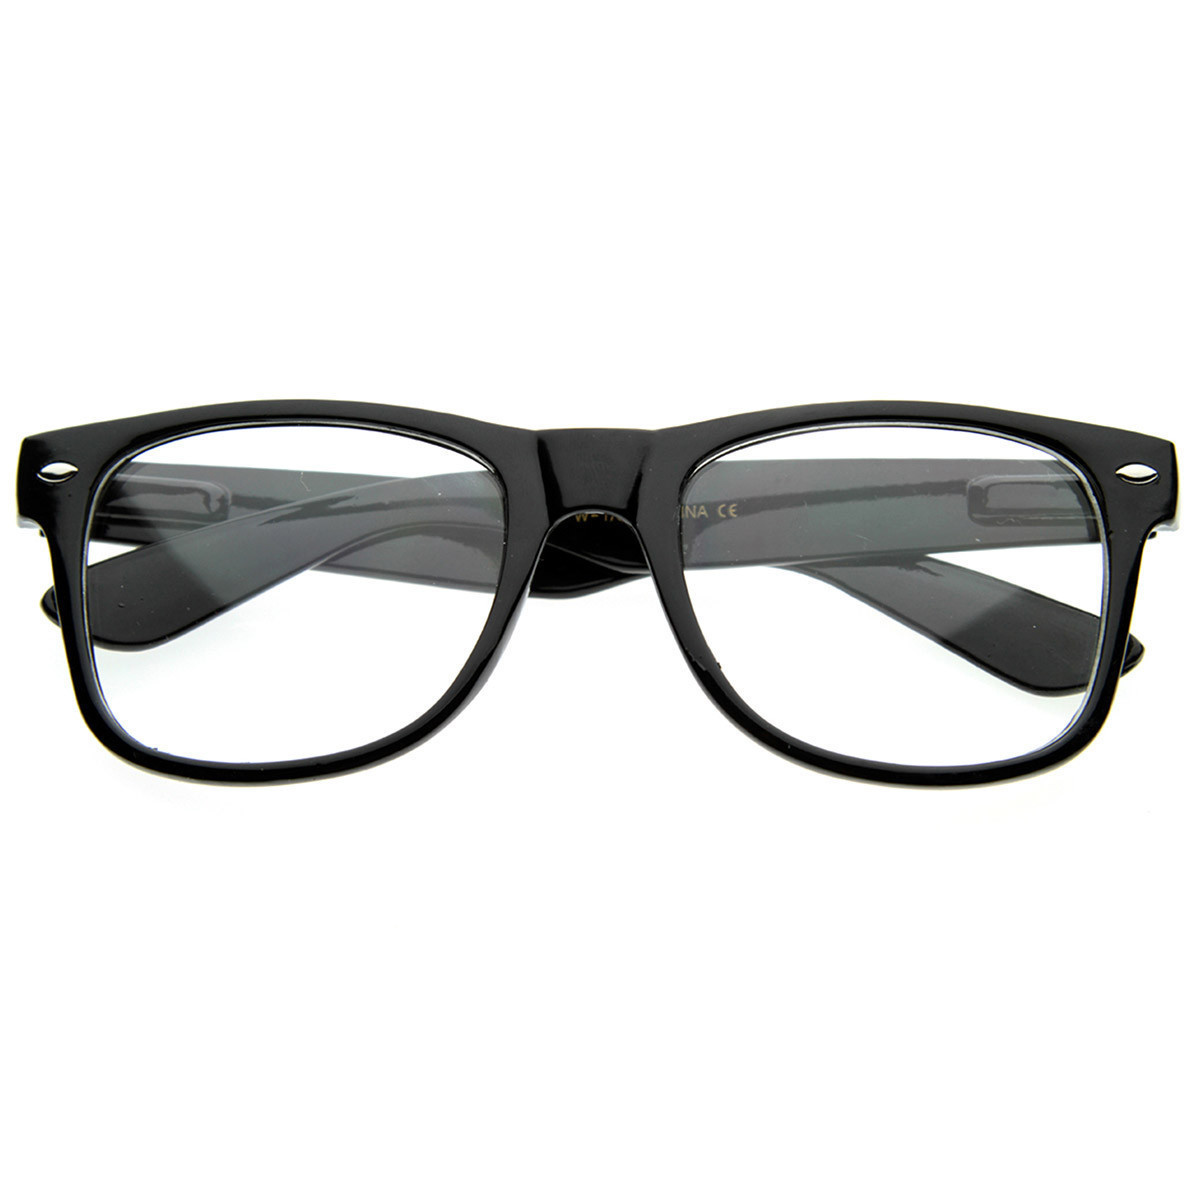 Standard Retro Clear Lens Nerd Geek Assorted Color Horned Rim Glasses - 2873 - Black